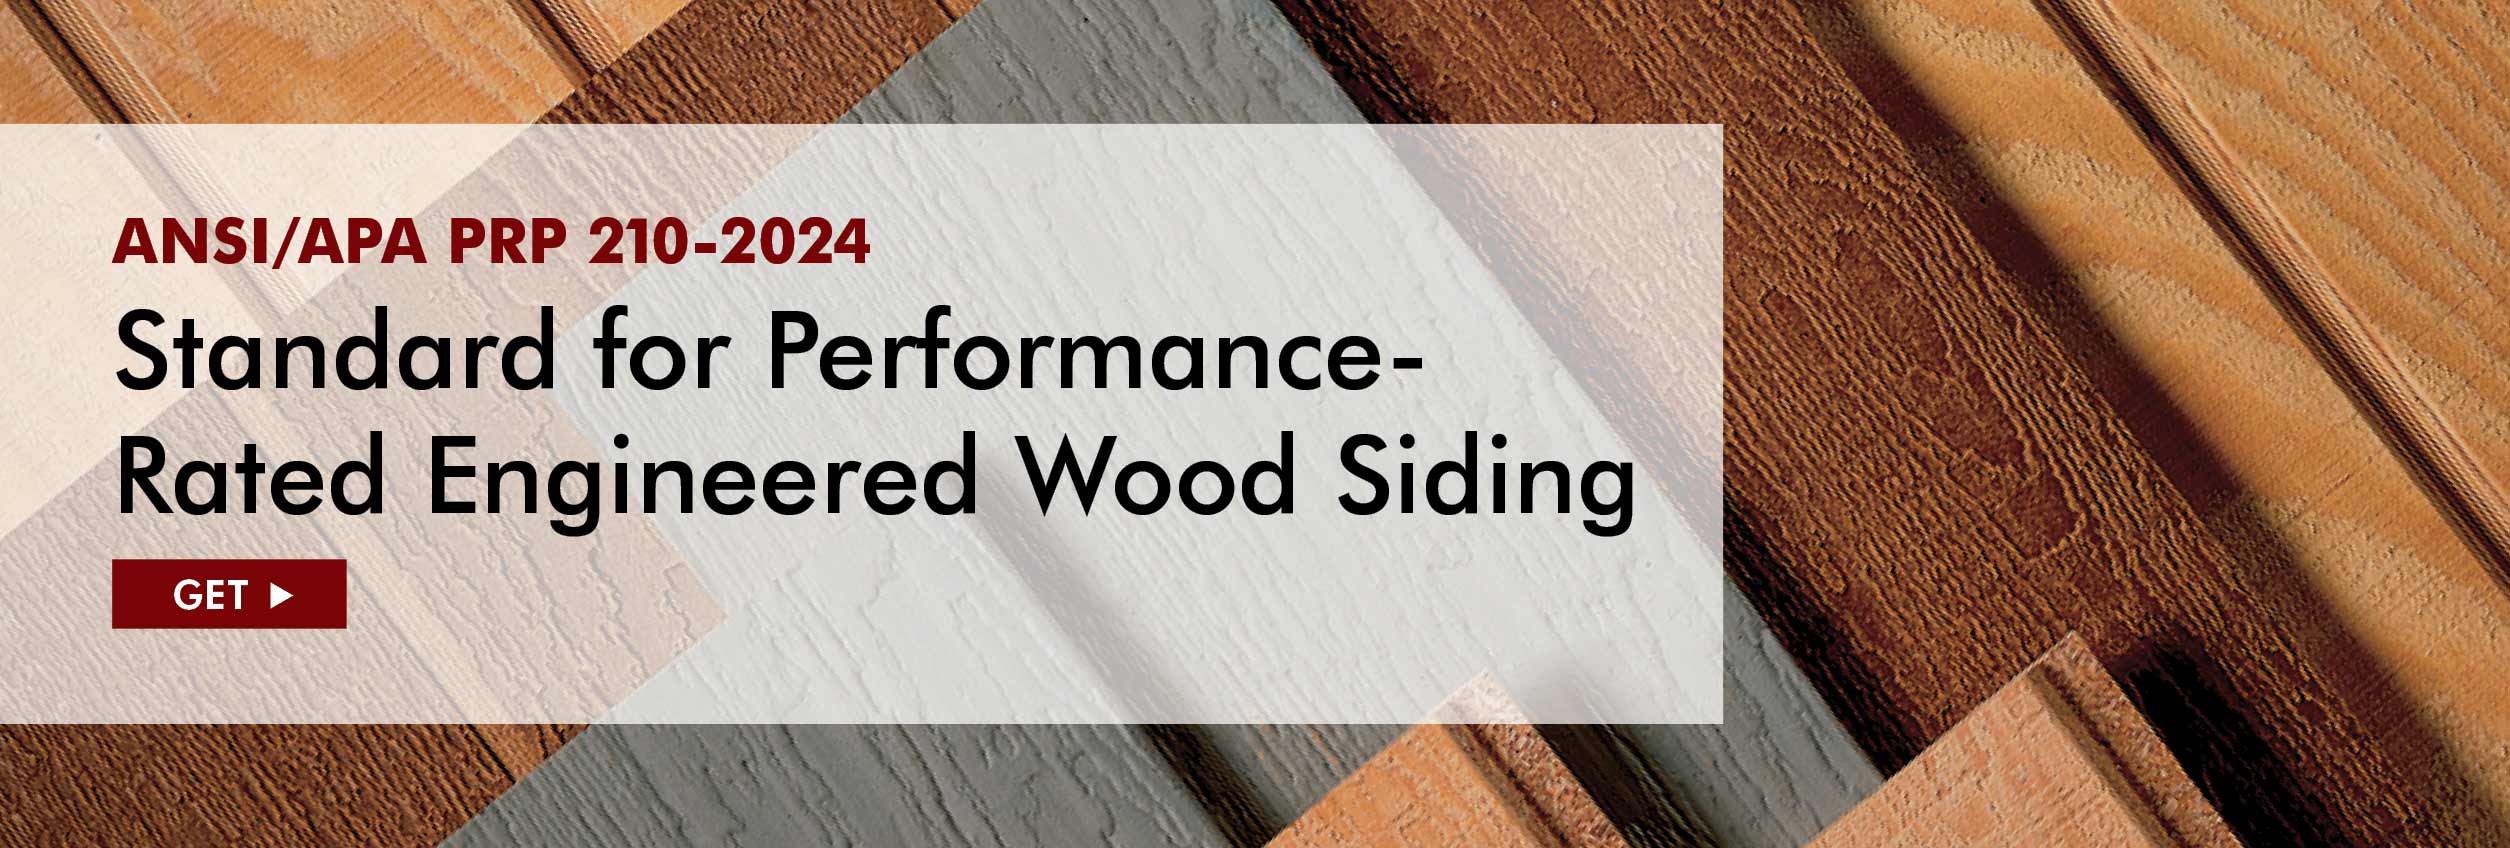 PANSI/APA PRP 210-2024: Standard for Performance-Rated Engineered Wood Siding